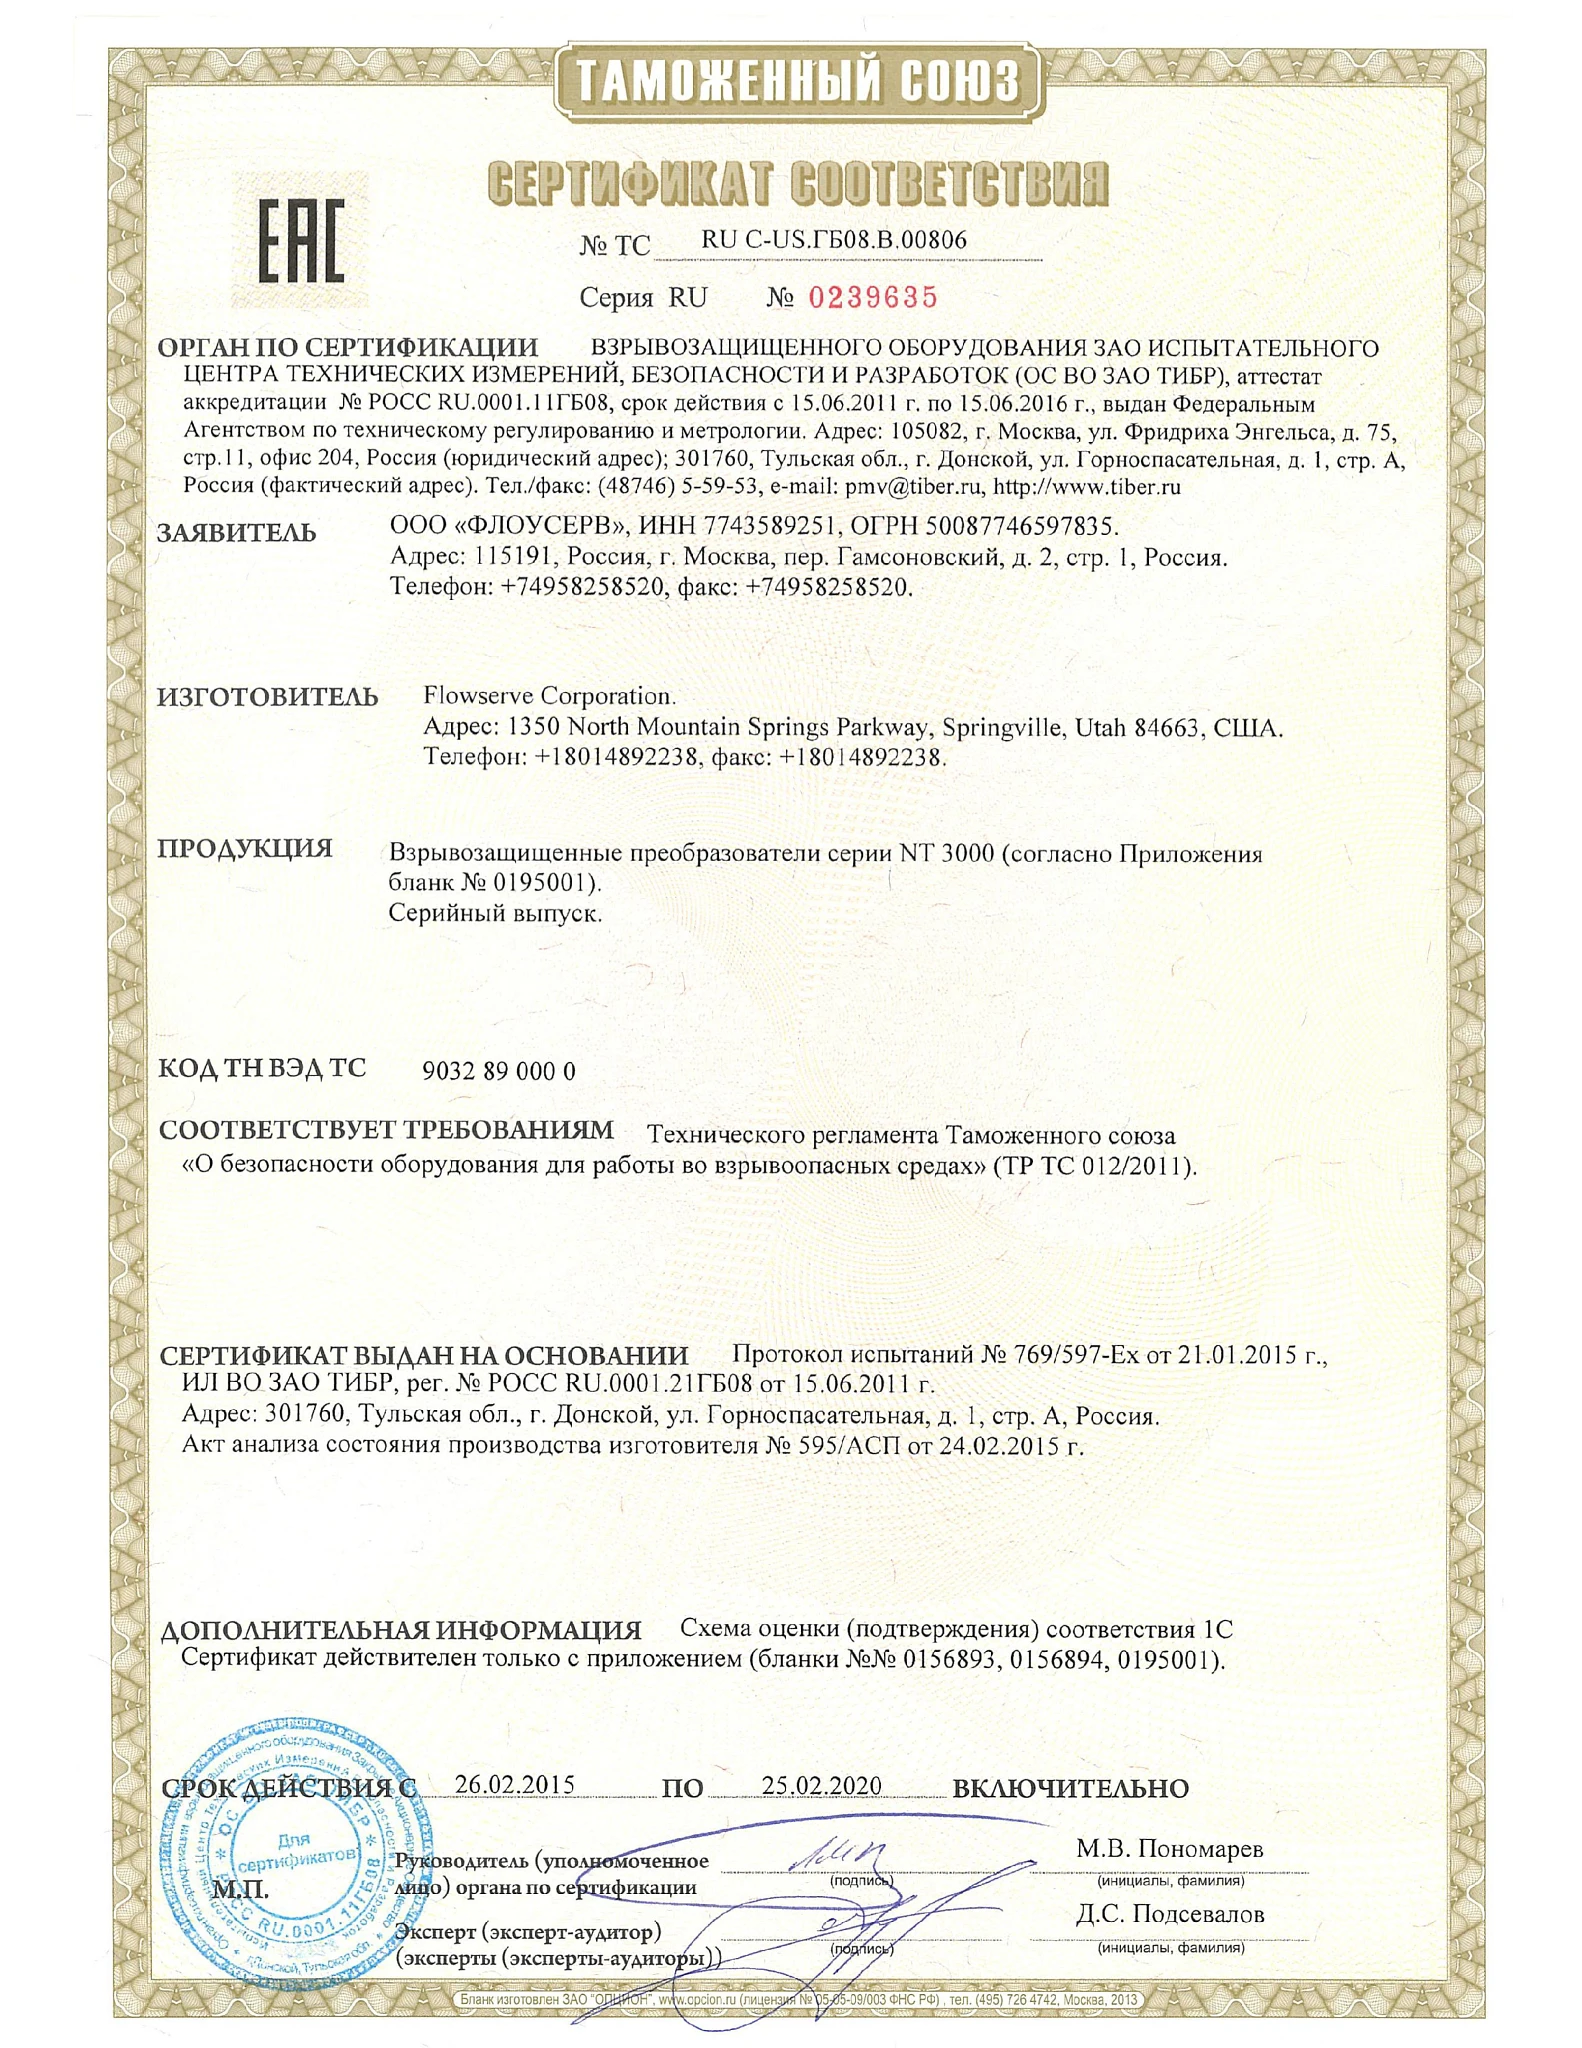 Valtek NT3000 TR CU (GOST) 证书